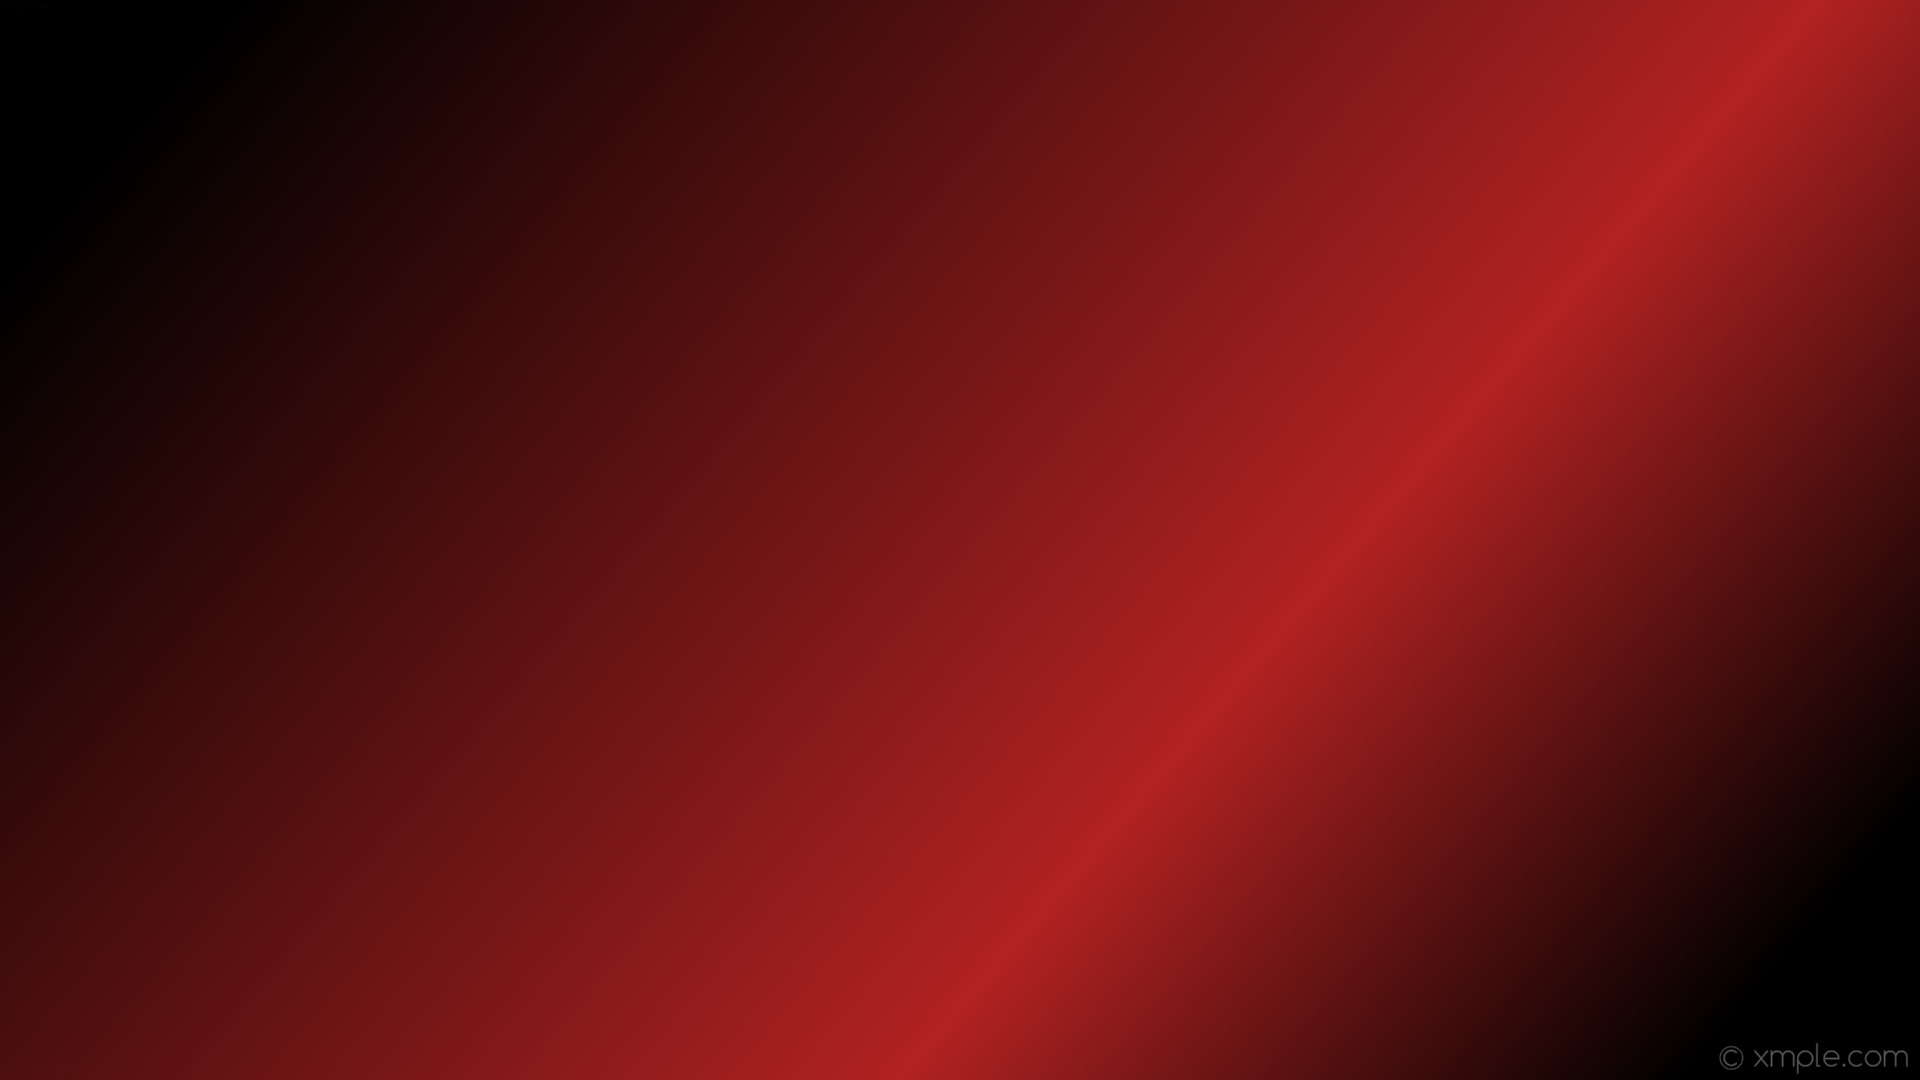 1920x1080 wallpaper red black highlight gradient linear fire brick #000000 #b22222  165Â° 67%